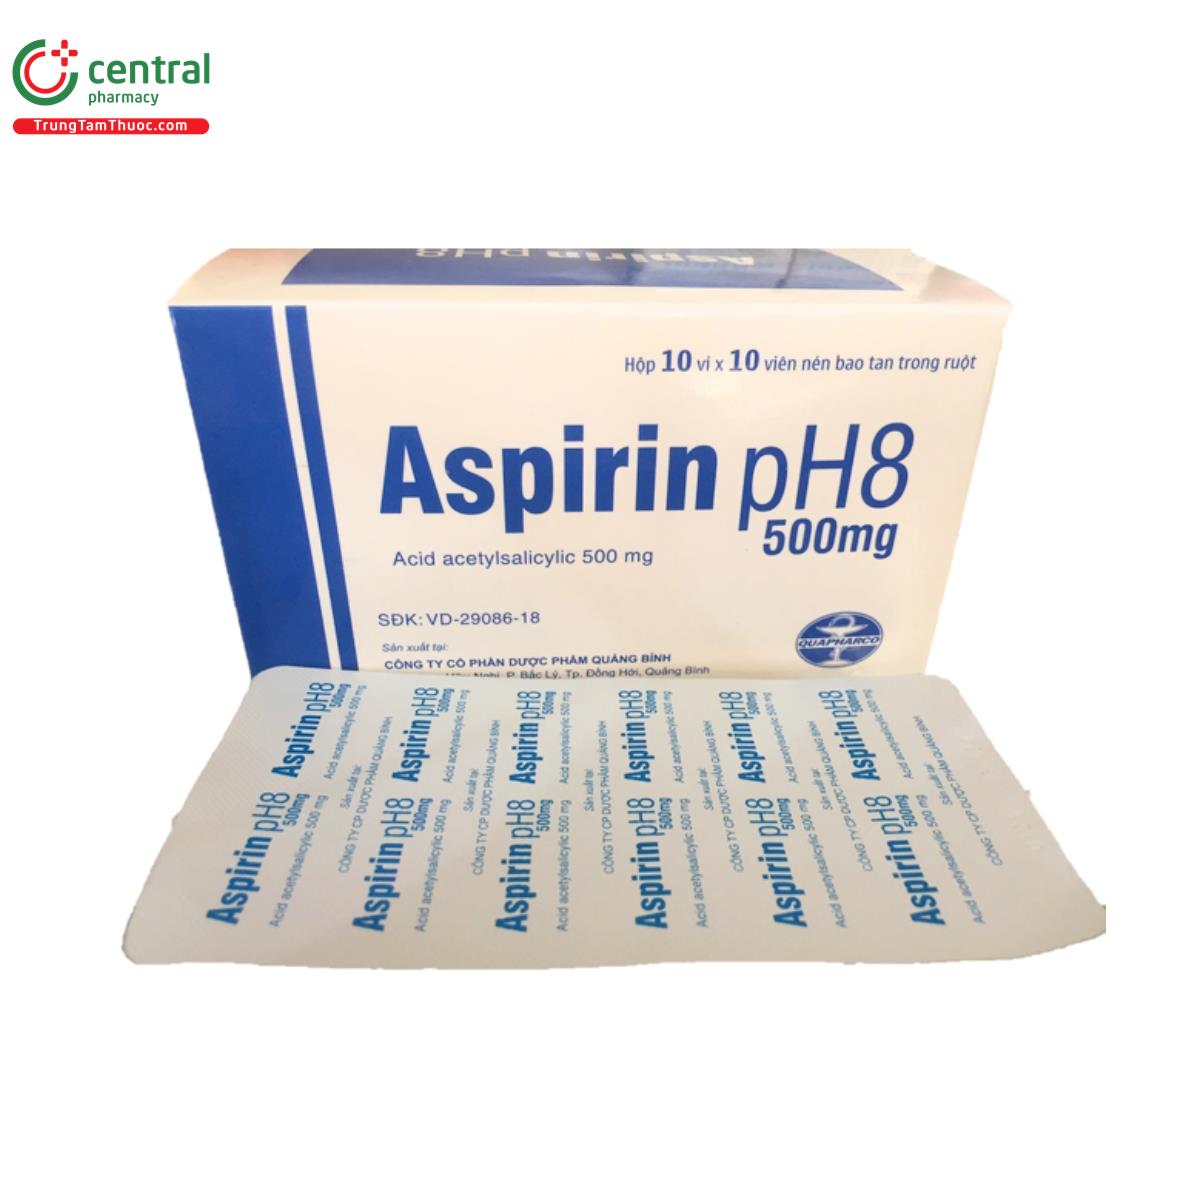 aspirin ph8 500mg quapharco 2 L4252